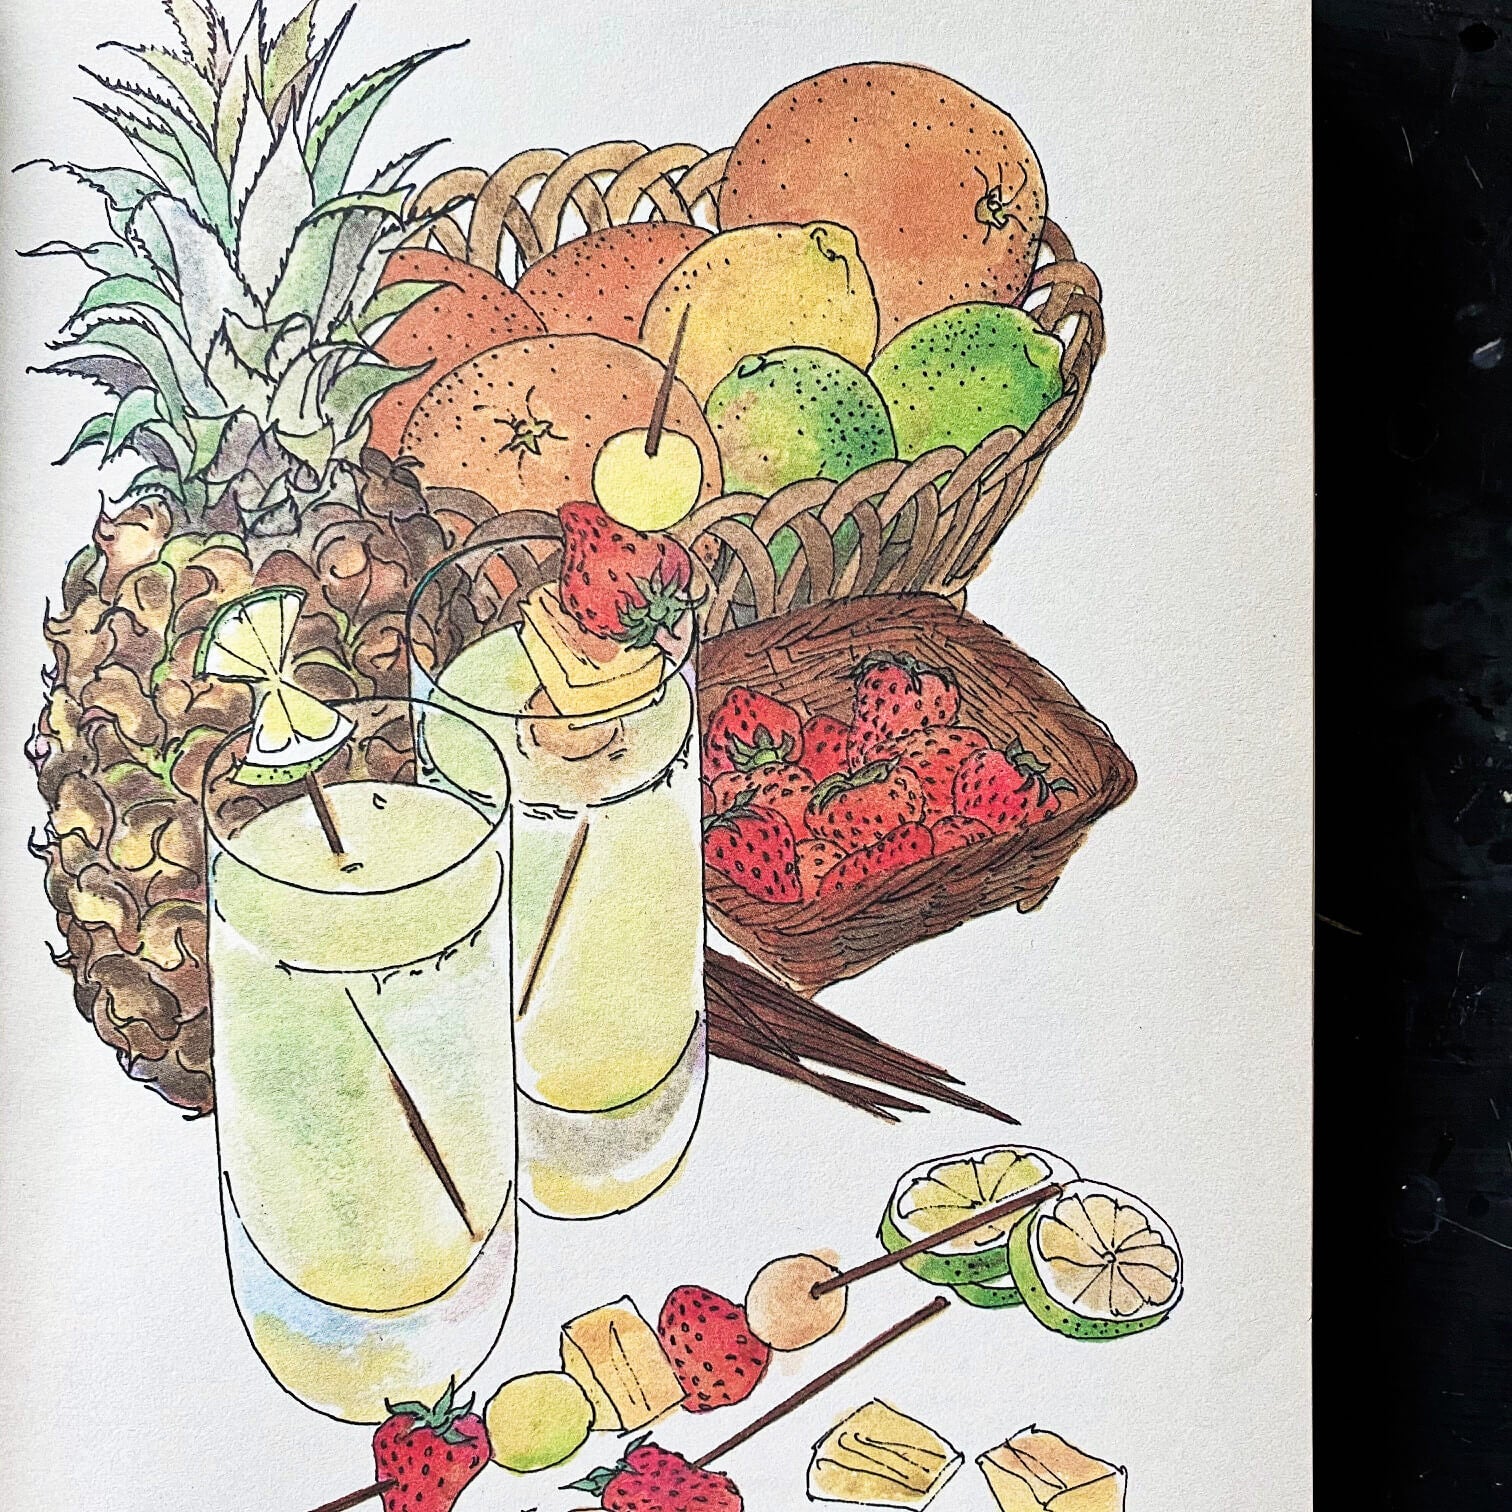 Culinary Crafting - Doris McFerran Townsend - 1976 Food Garnishing Cookbook & Styling Guide